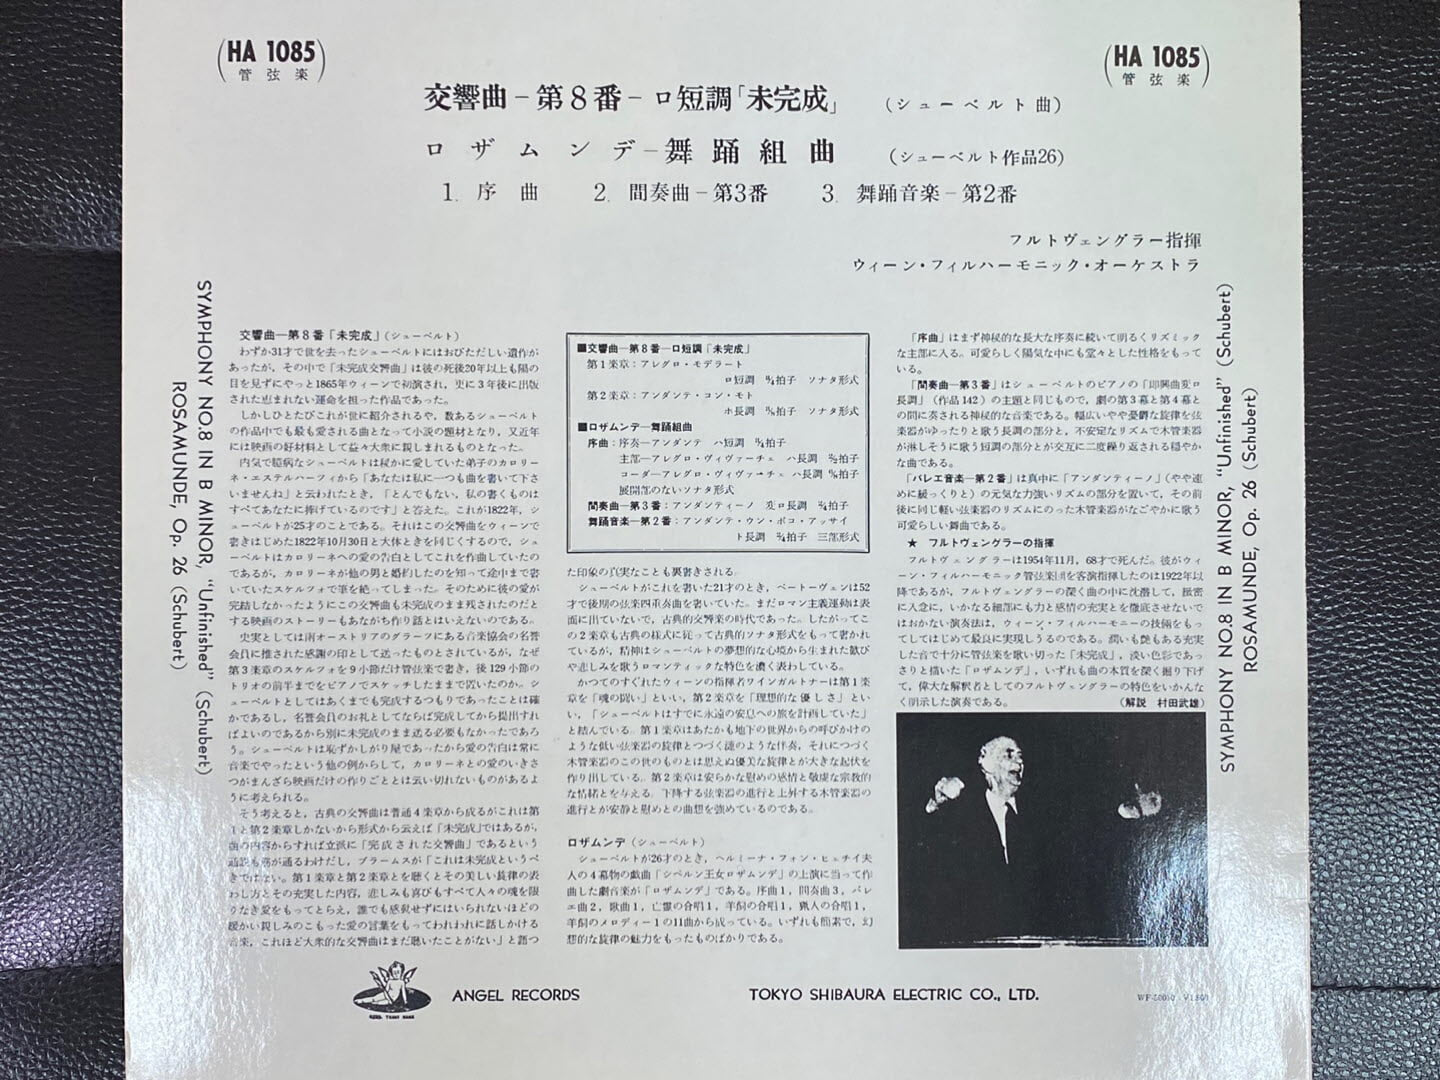 [LP] 푸르트벵글러 - Furtwangler - Schubert Symphony No.8 "Unfinished", "Rosamunde" LP [일본반]